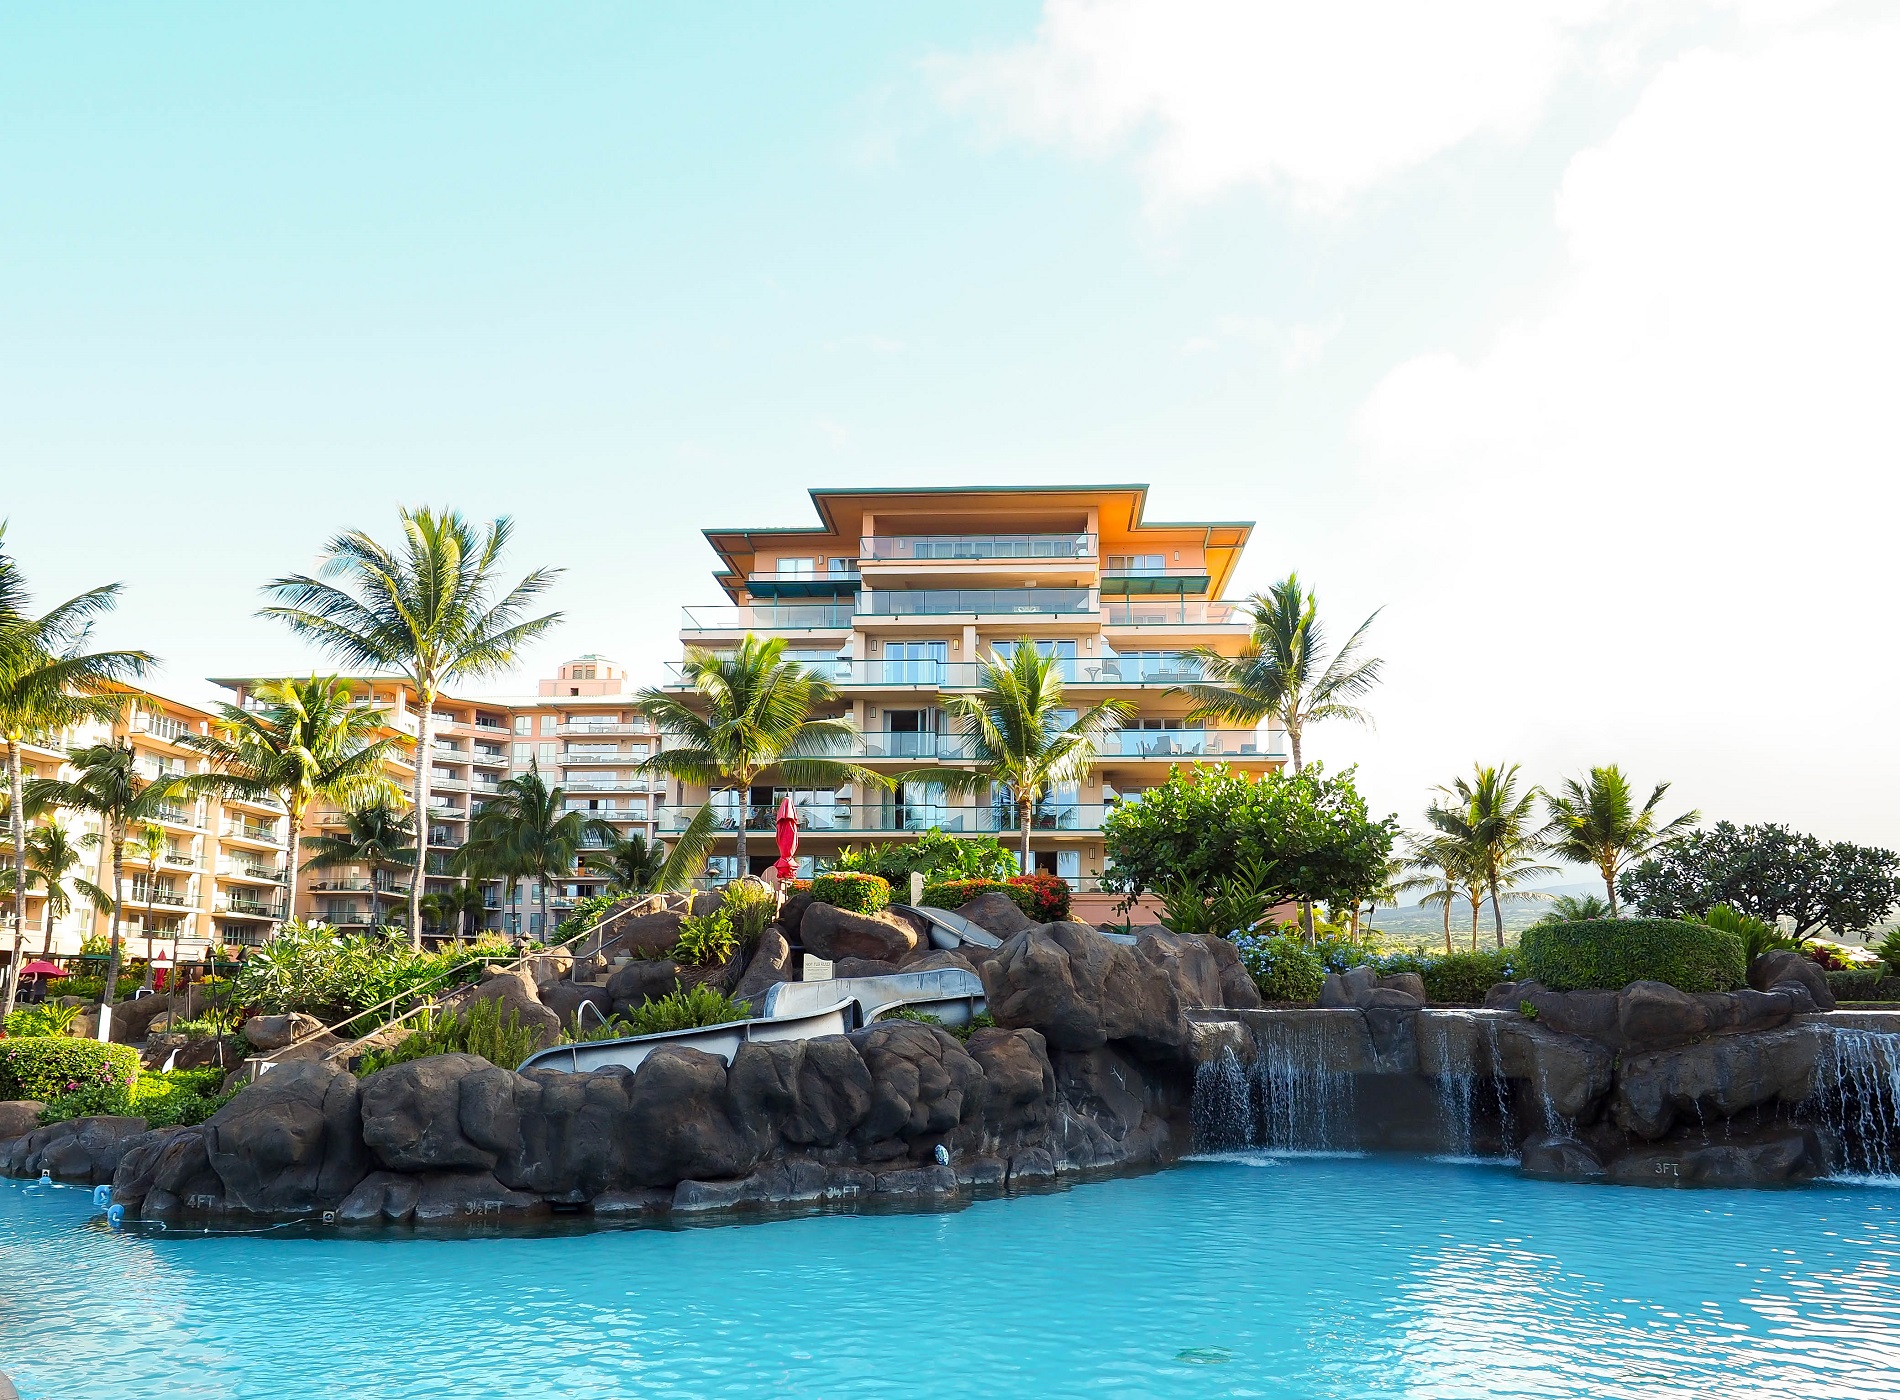 Honua Kai Maui resort with pool